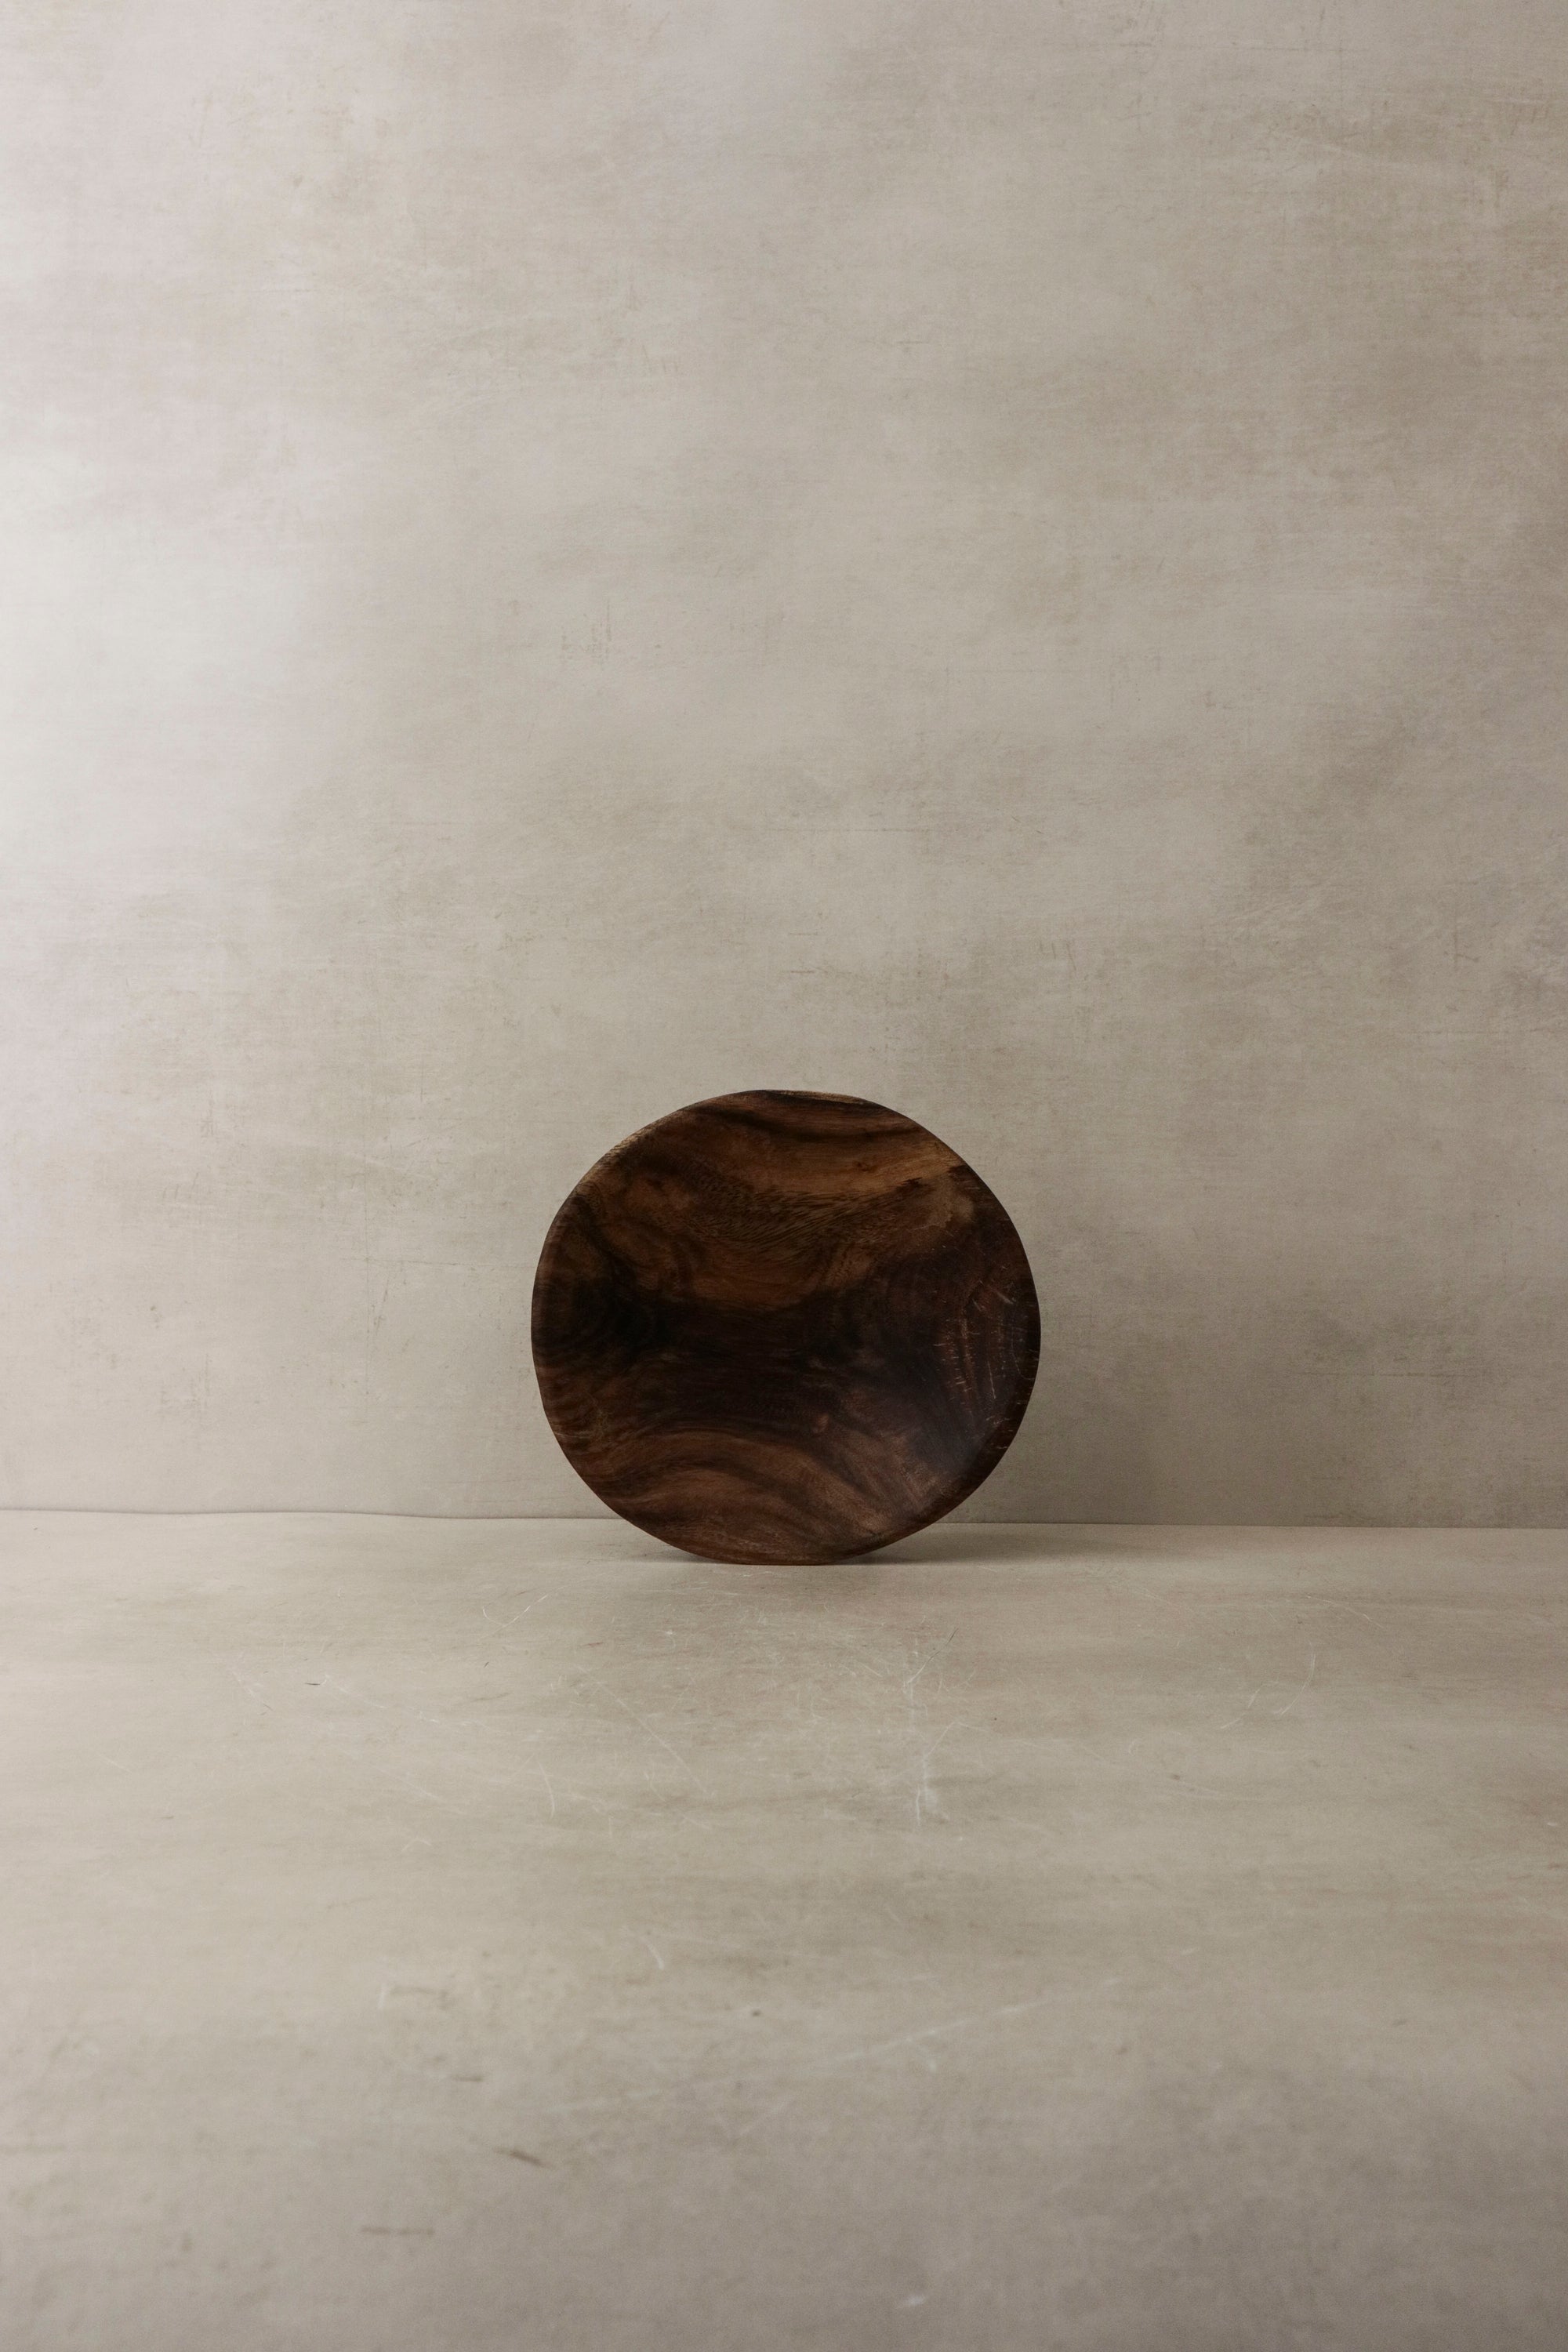 Handmade wooden bowl, Zimbabwe - 12.4